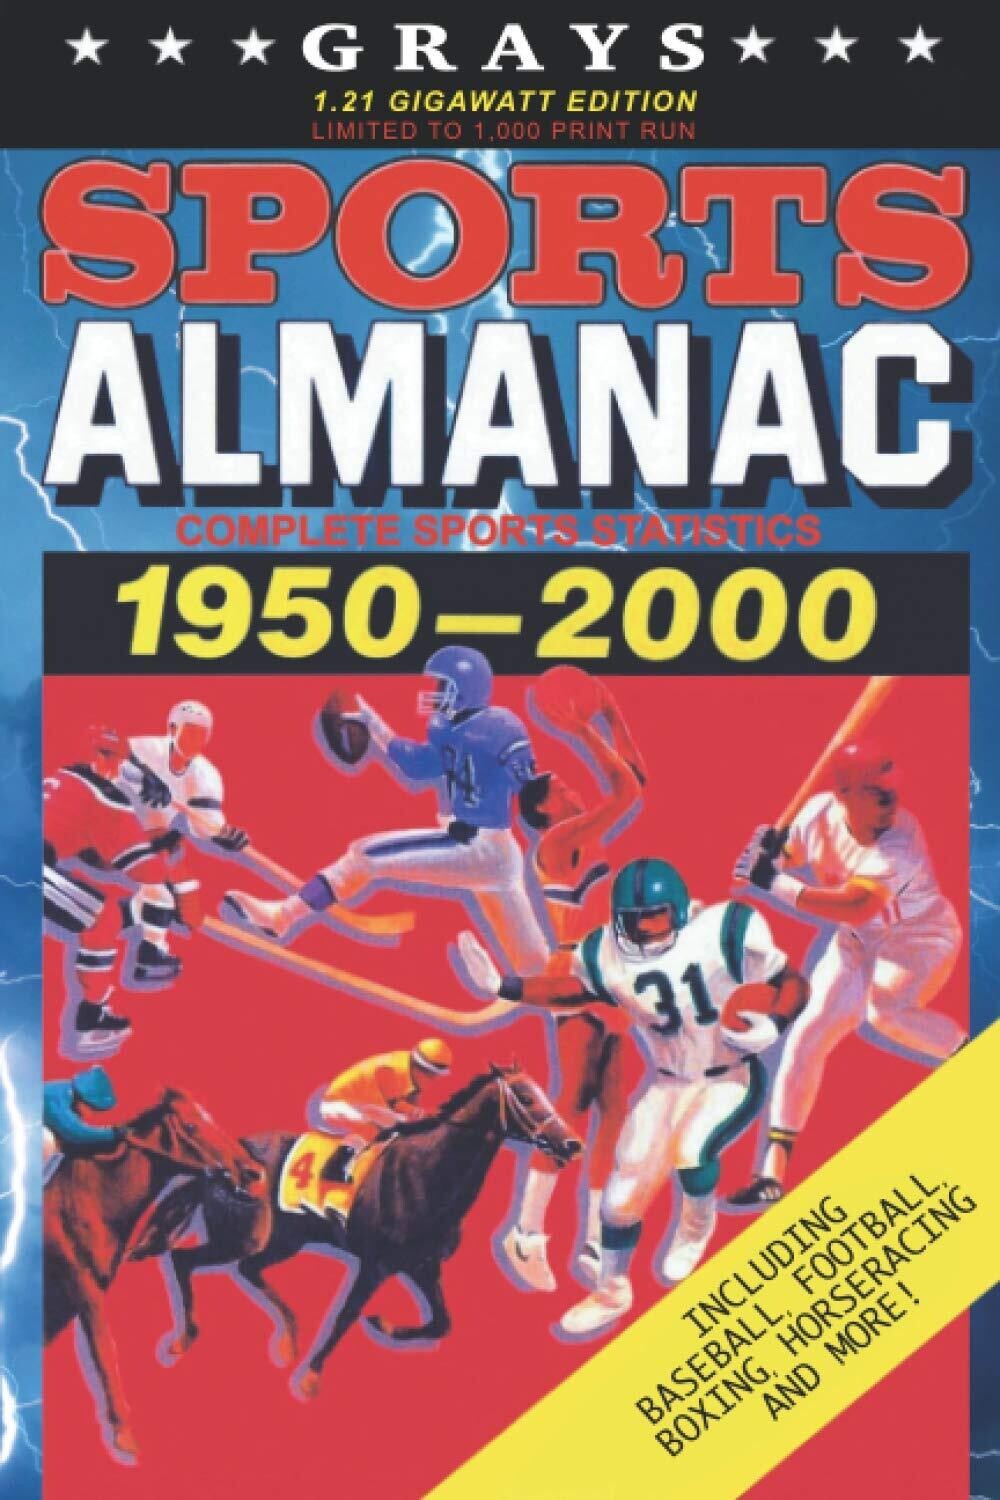 Grays Sports Almanac: Complete Sports Statistics 1950-2000 Book [1.21 Gigawatt Edition - LIMITED TO 1,000 PRINT RUN]